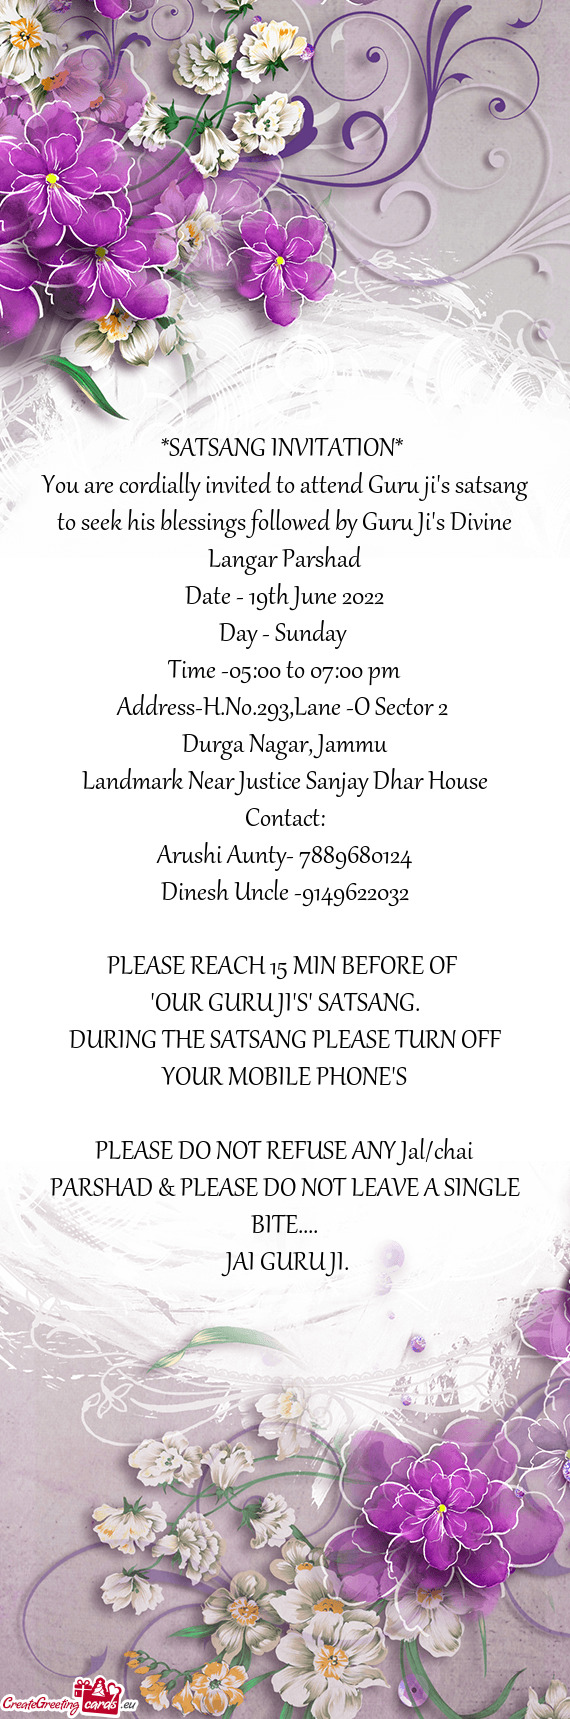 You are cordially invited to attend Guru ji